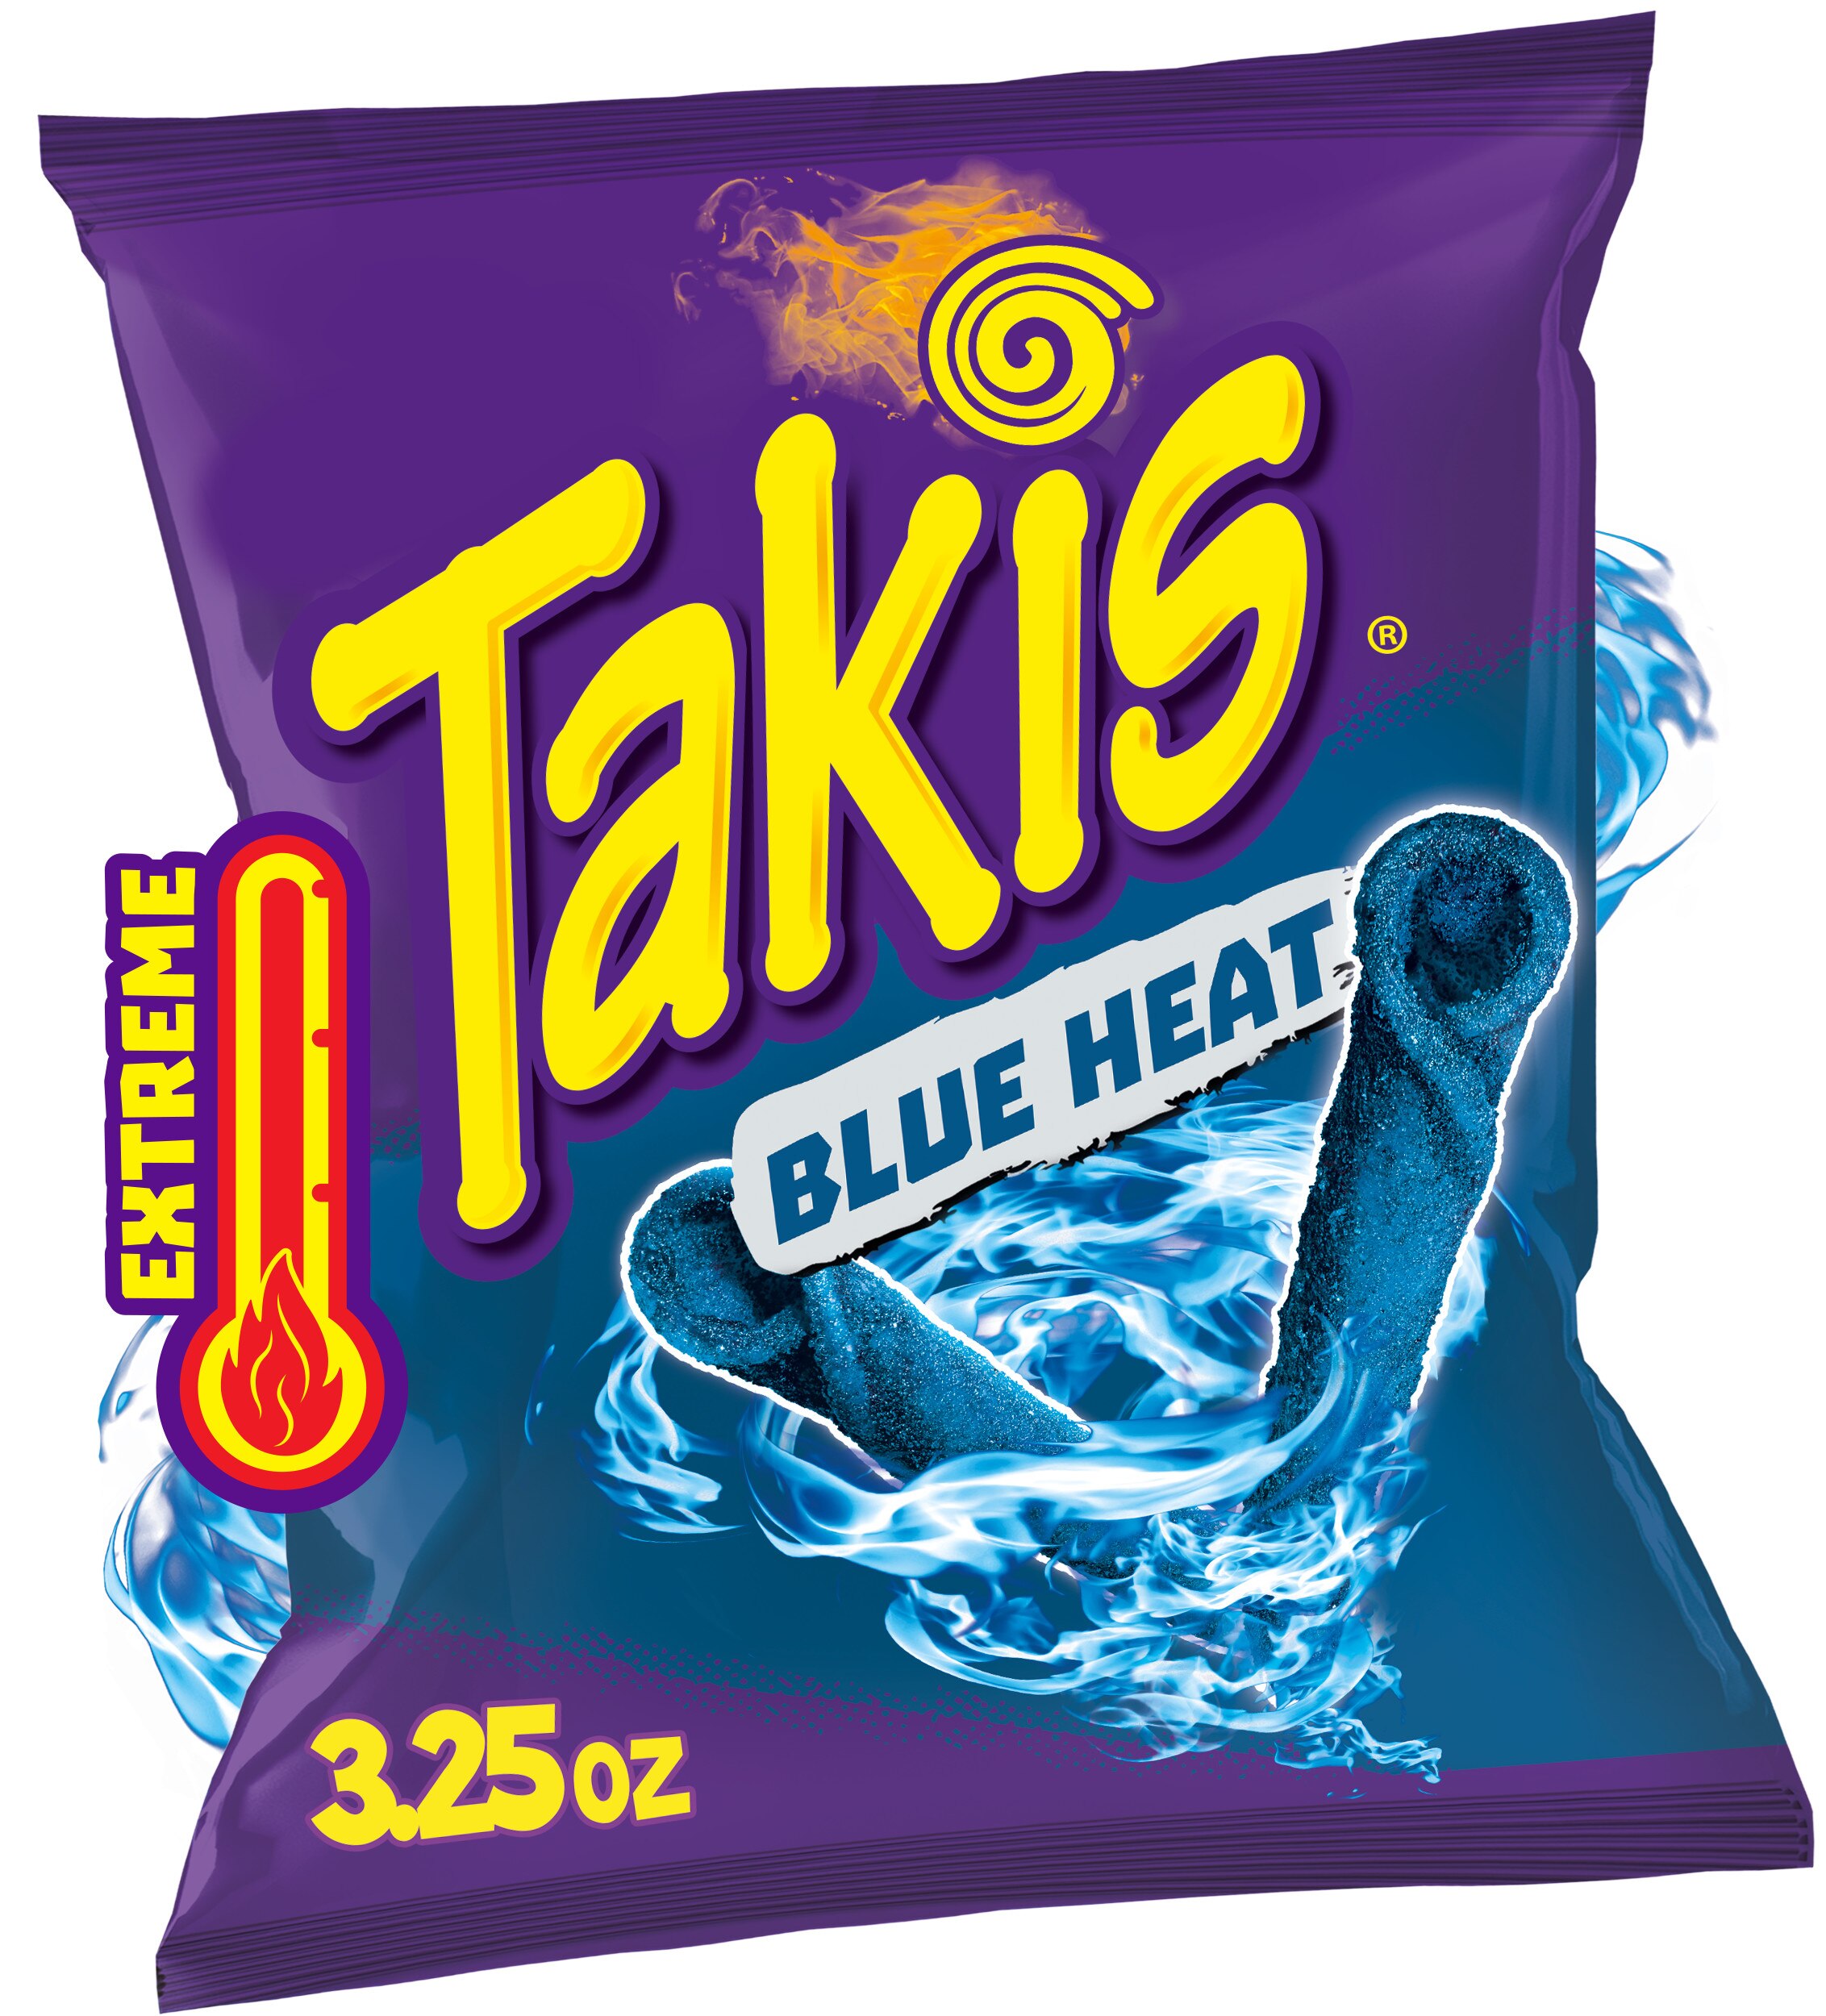 Takis Blue Heat Rolls Hot Chili Pepper Flavored Spicy Tortilla Chips, 3.25 Oz , CVS